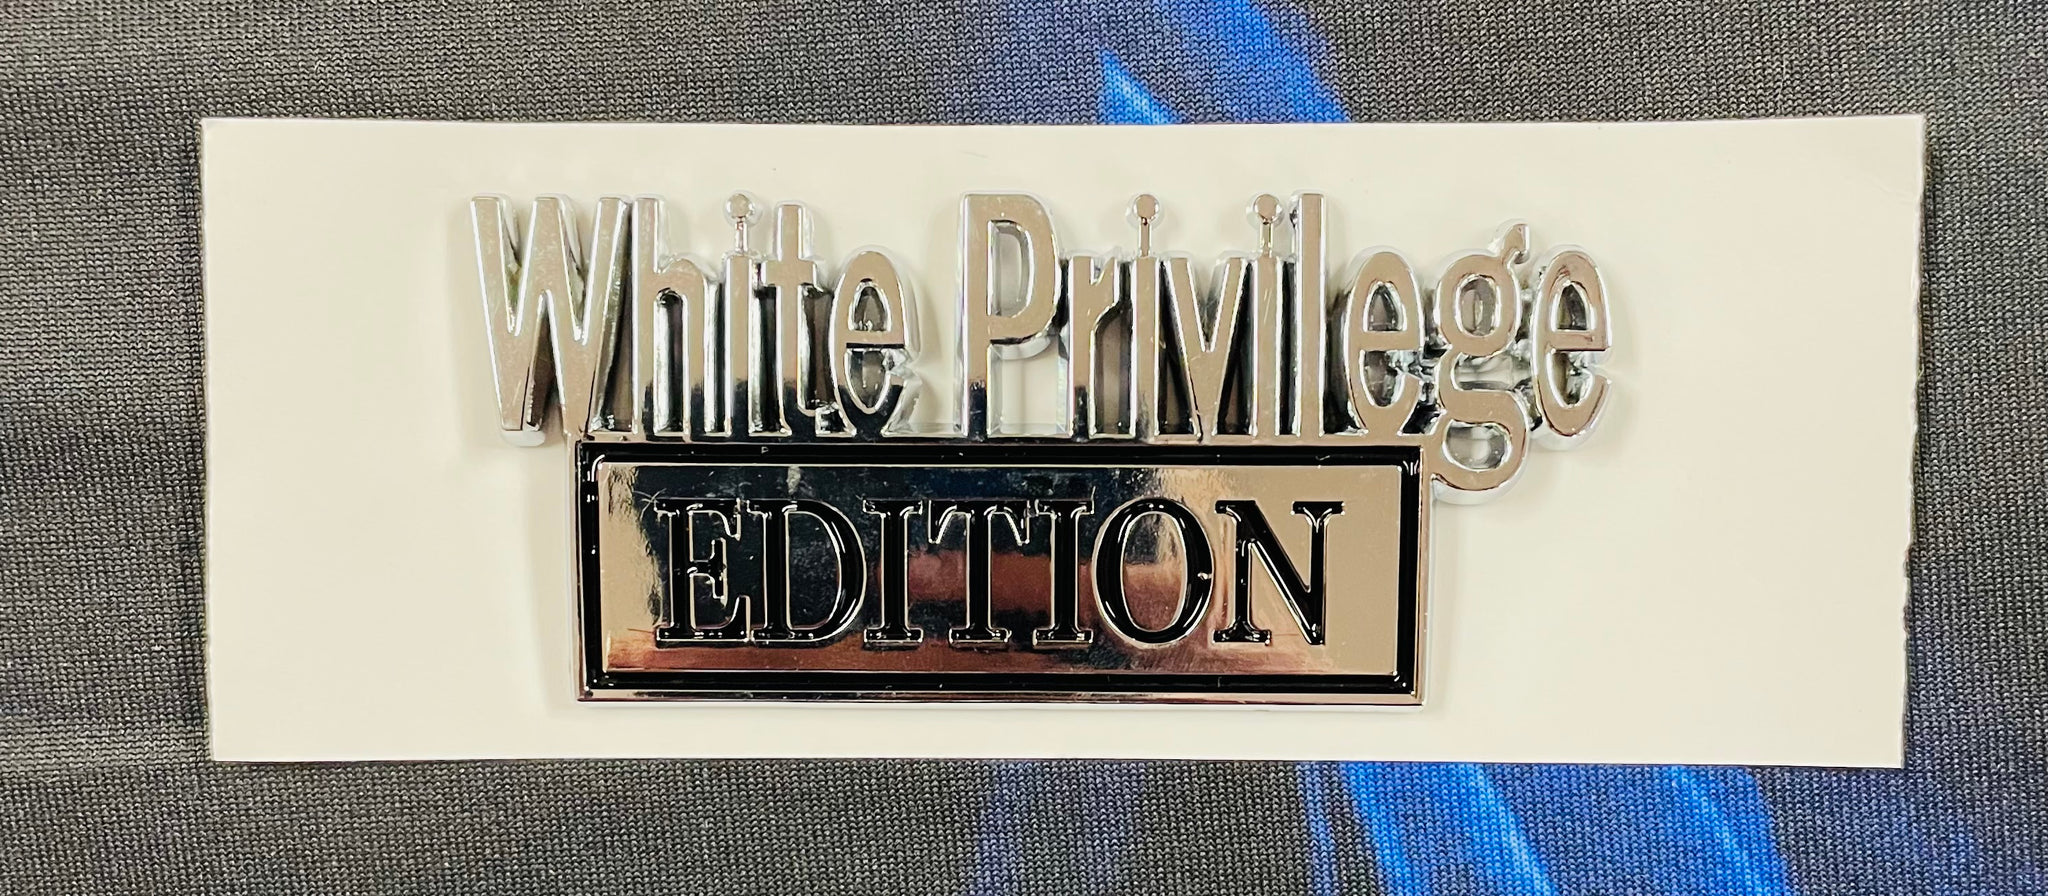 "White Privilege Edition" Car Emblem